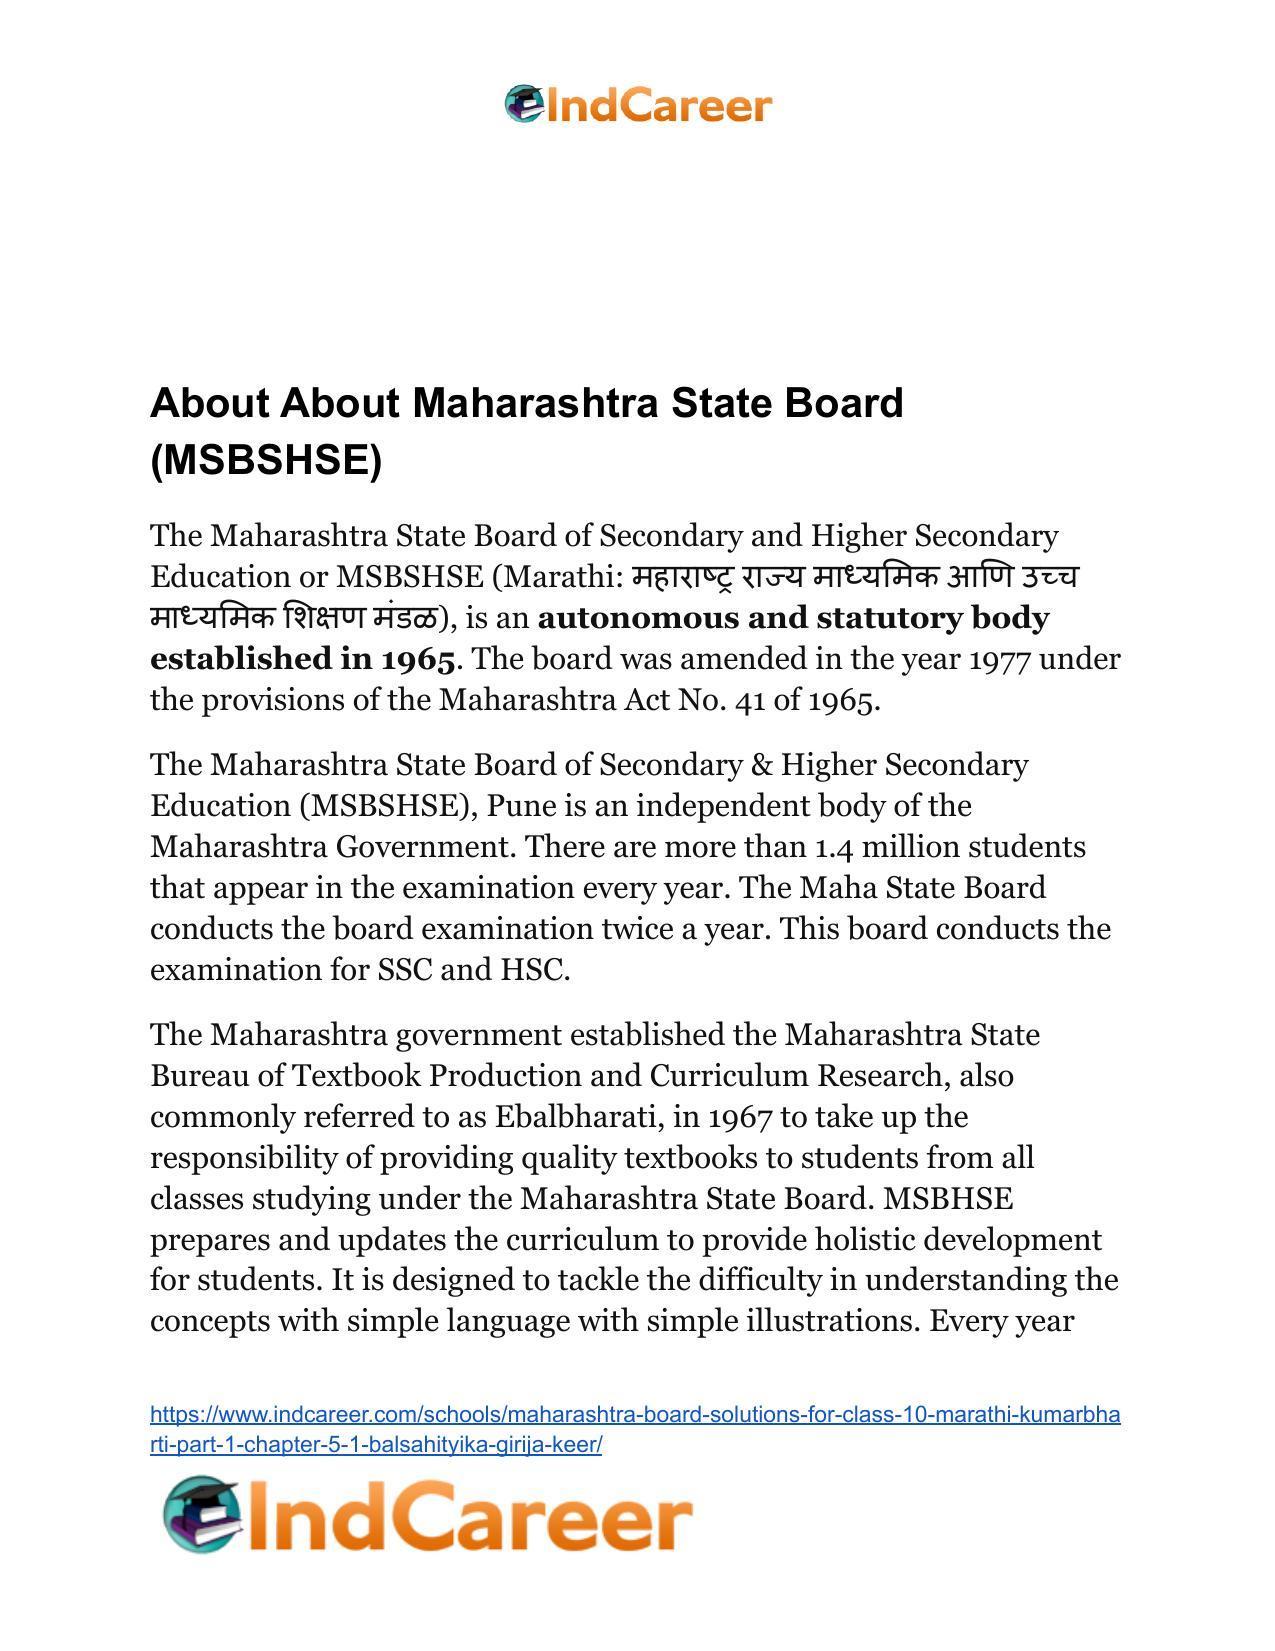 Maharashtra Board Solutions for Class 10- Marathi Kumarbharti (Part- 1): Chapter 5.1- बालसाहित्यिका : गिरिजा कीर - Page 7